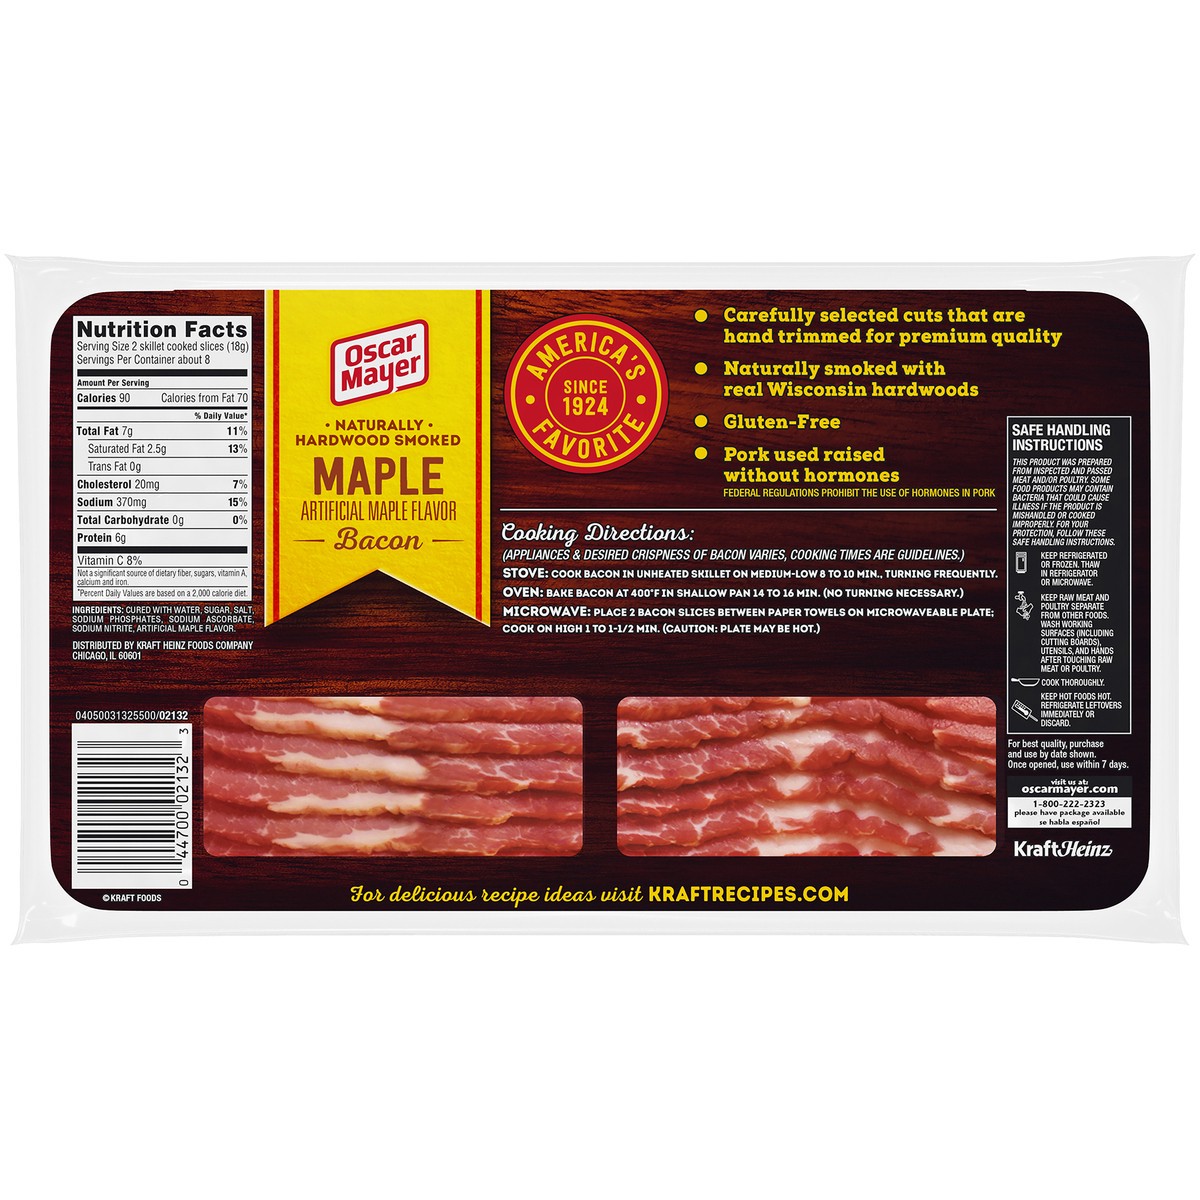 slide 3 of 8, Oscar Mayer Naturally Hardwood Smoked Maple Bacon, 16 oz Pack, 15-17 slices, 16 oz